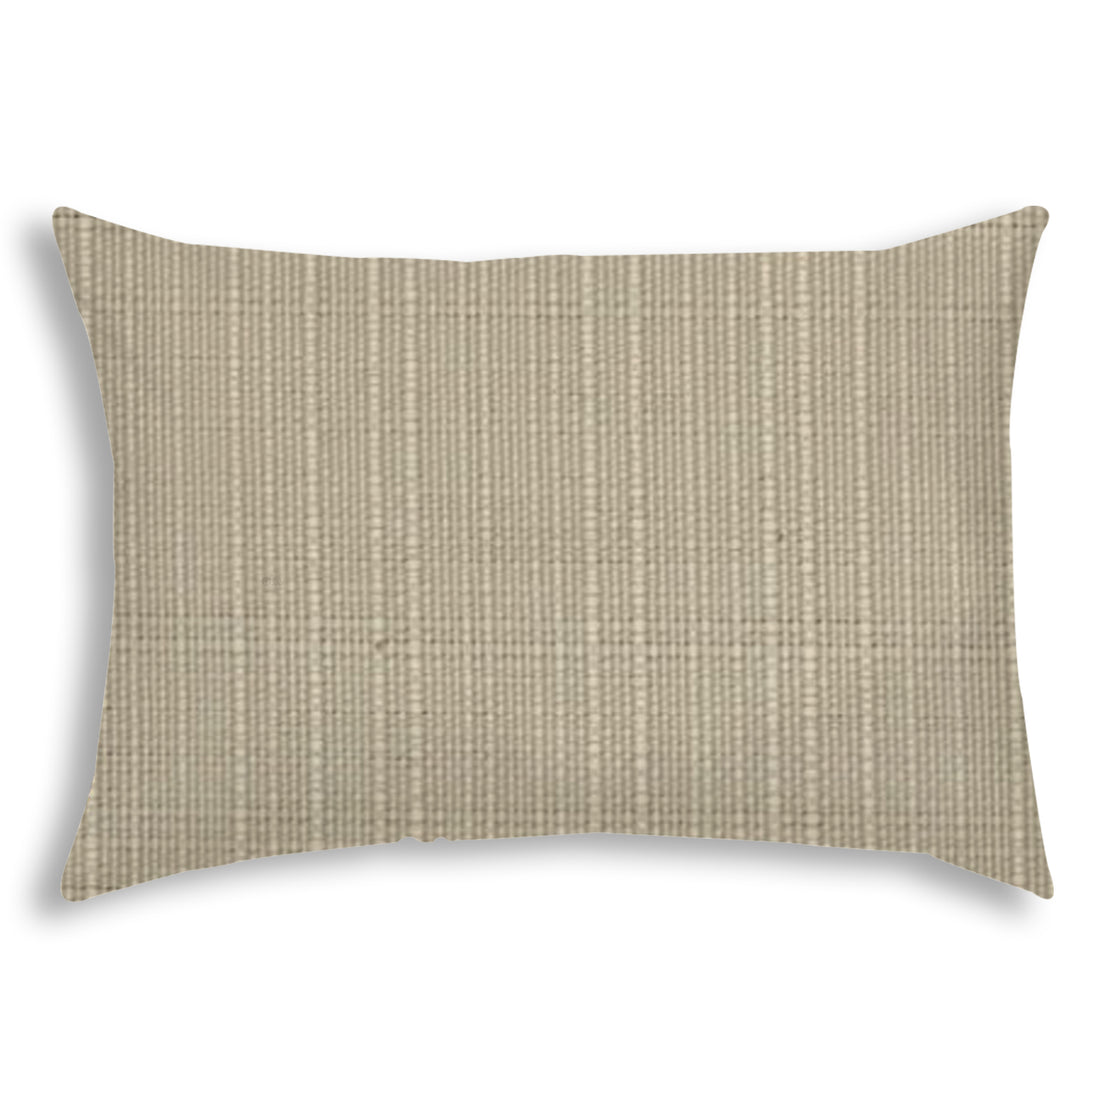 Forma Natural Indoor Outdoor Pillow Sewn Closure